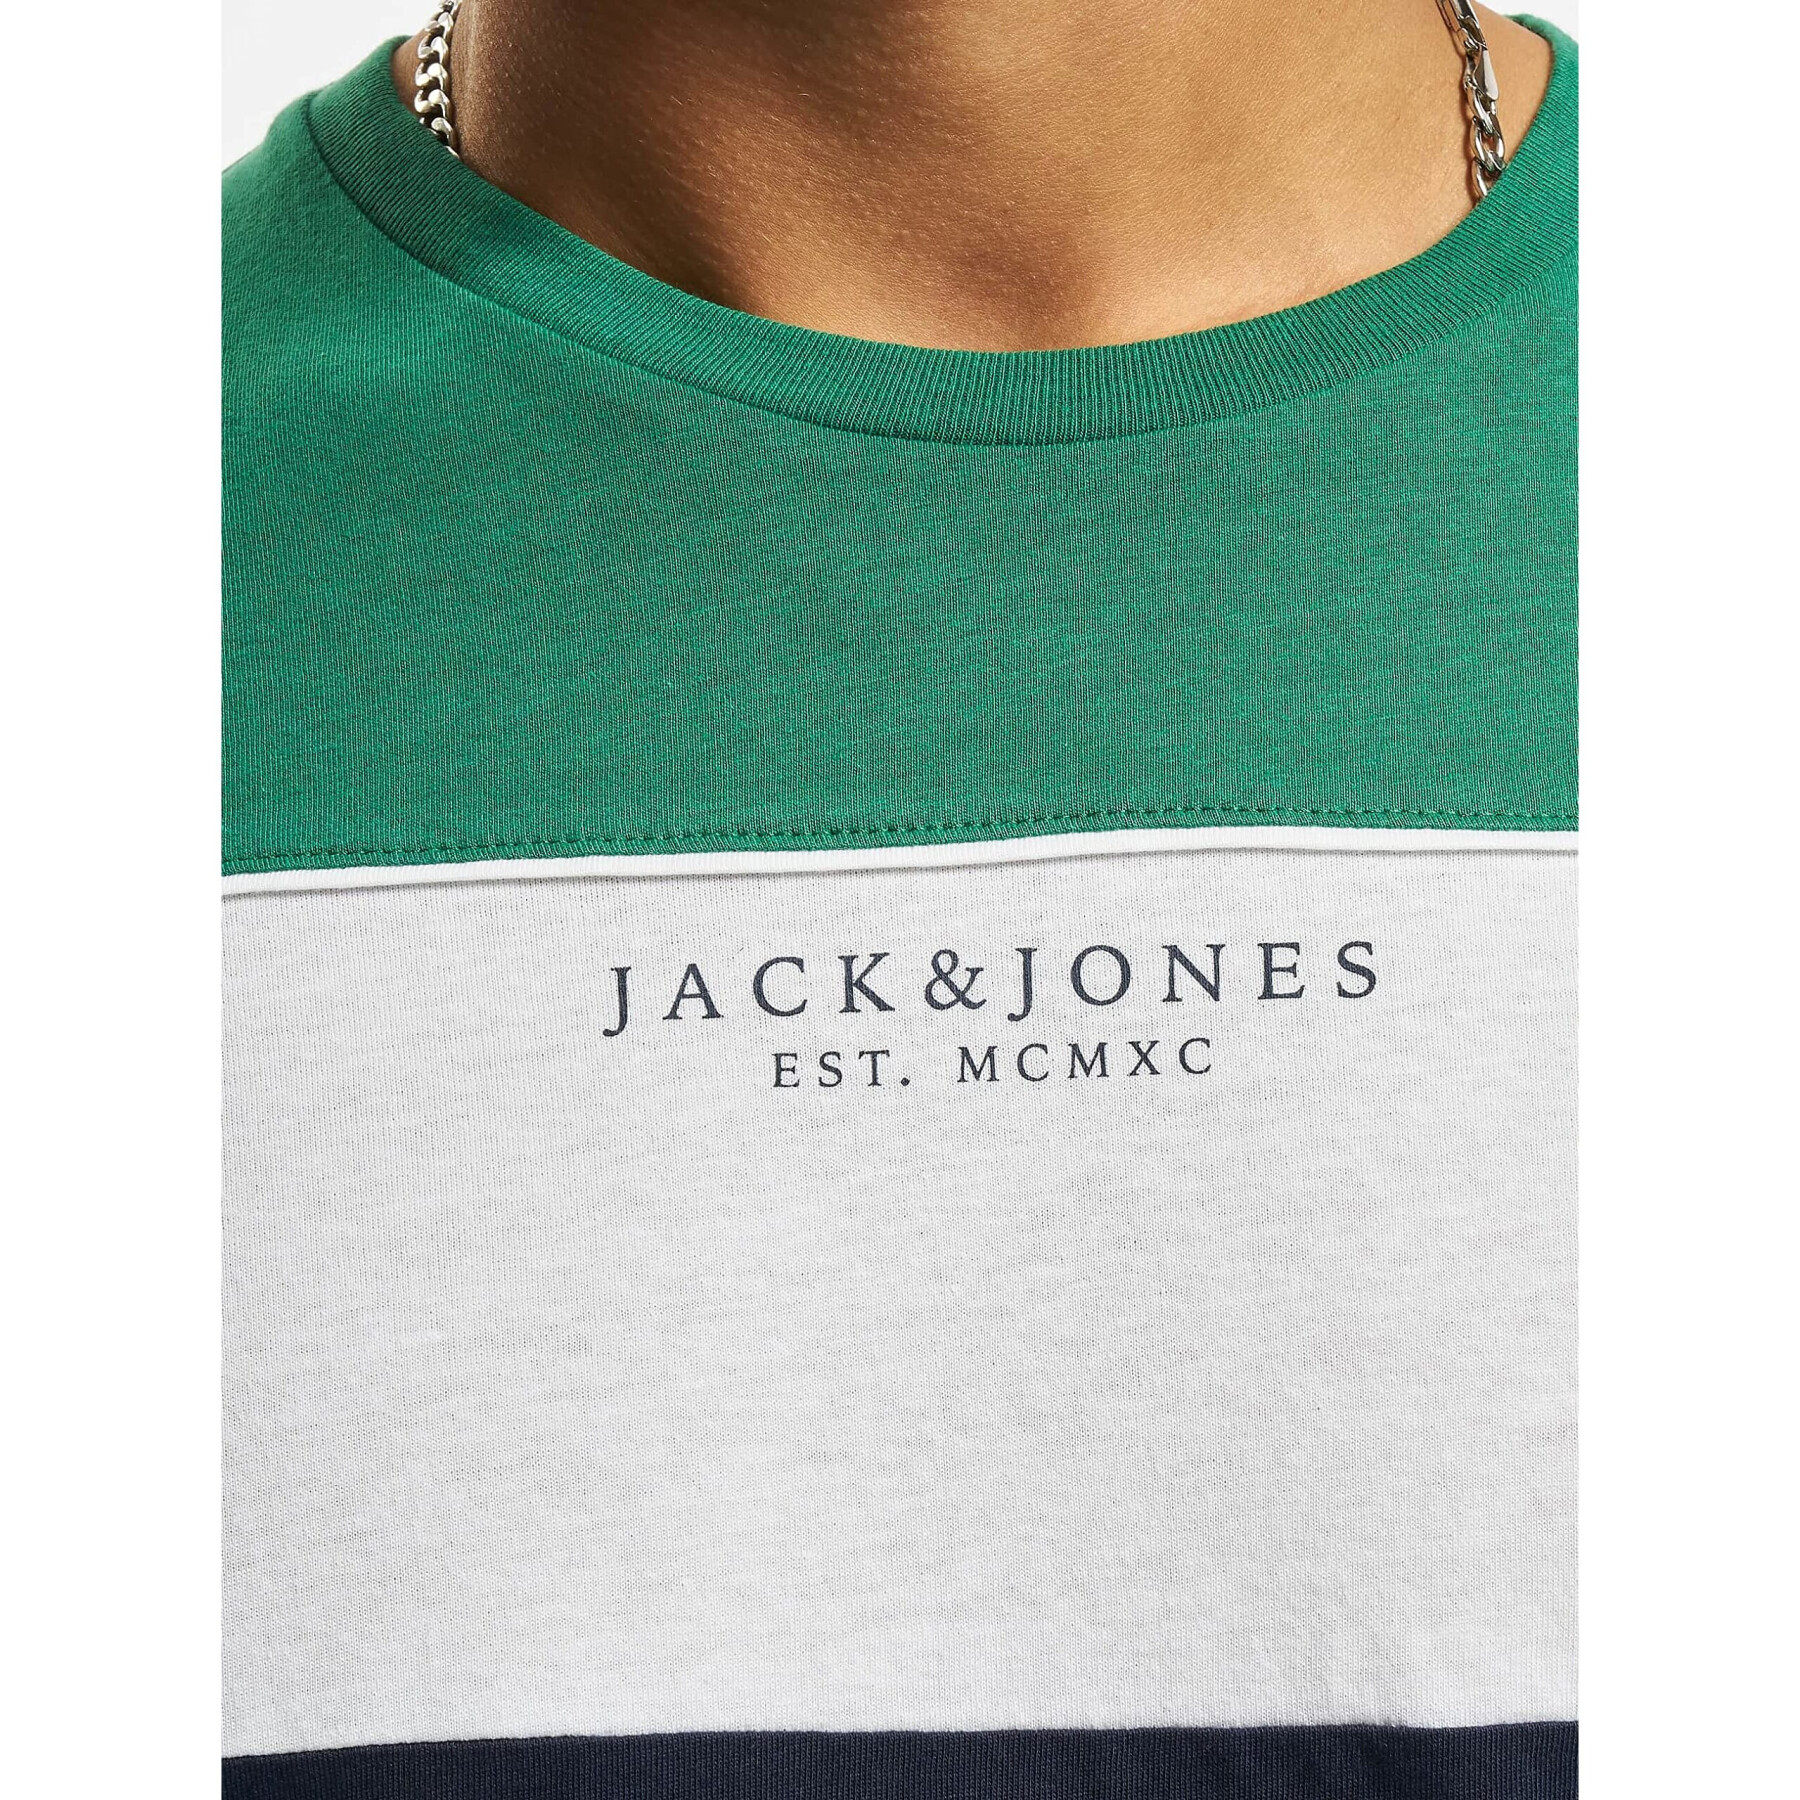 Camiseta Jack & Jones Monse